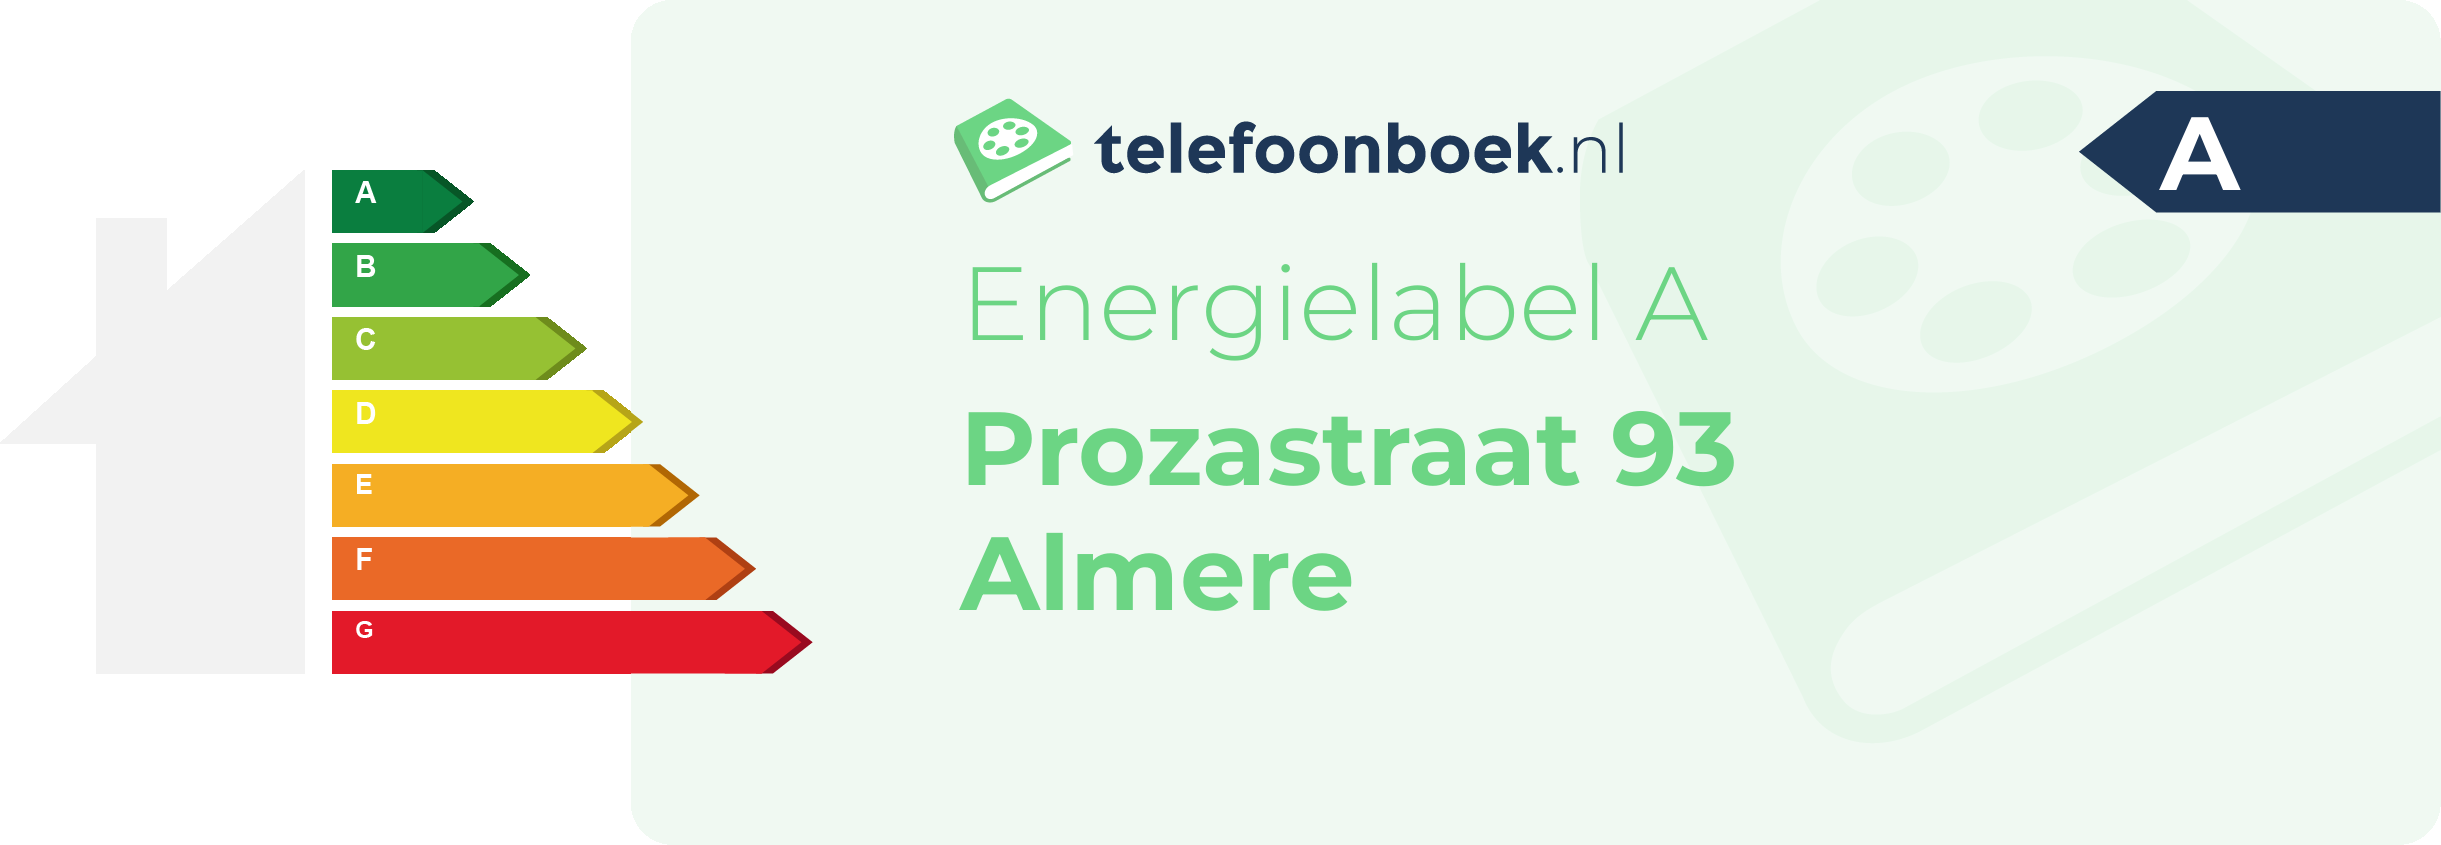 Energielabel Prozastraat 93 Almere